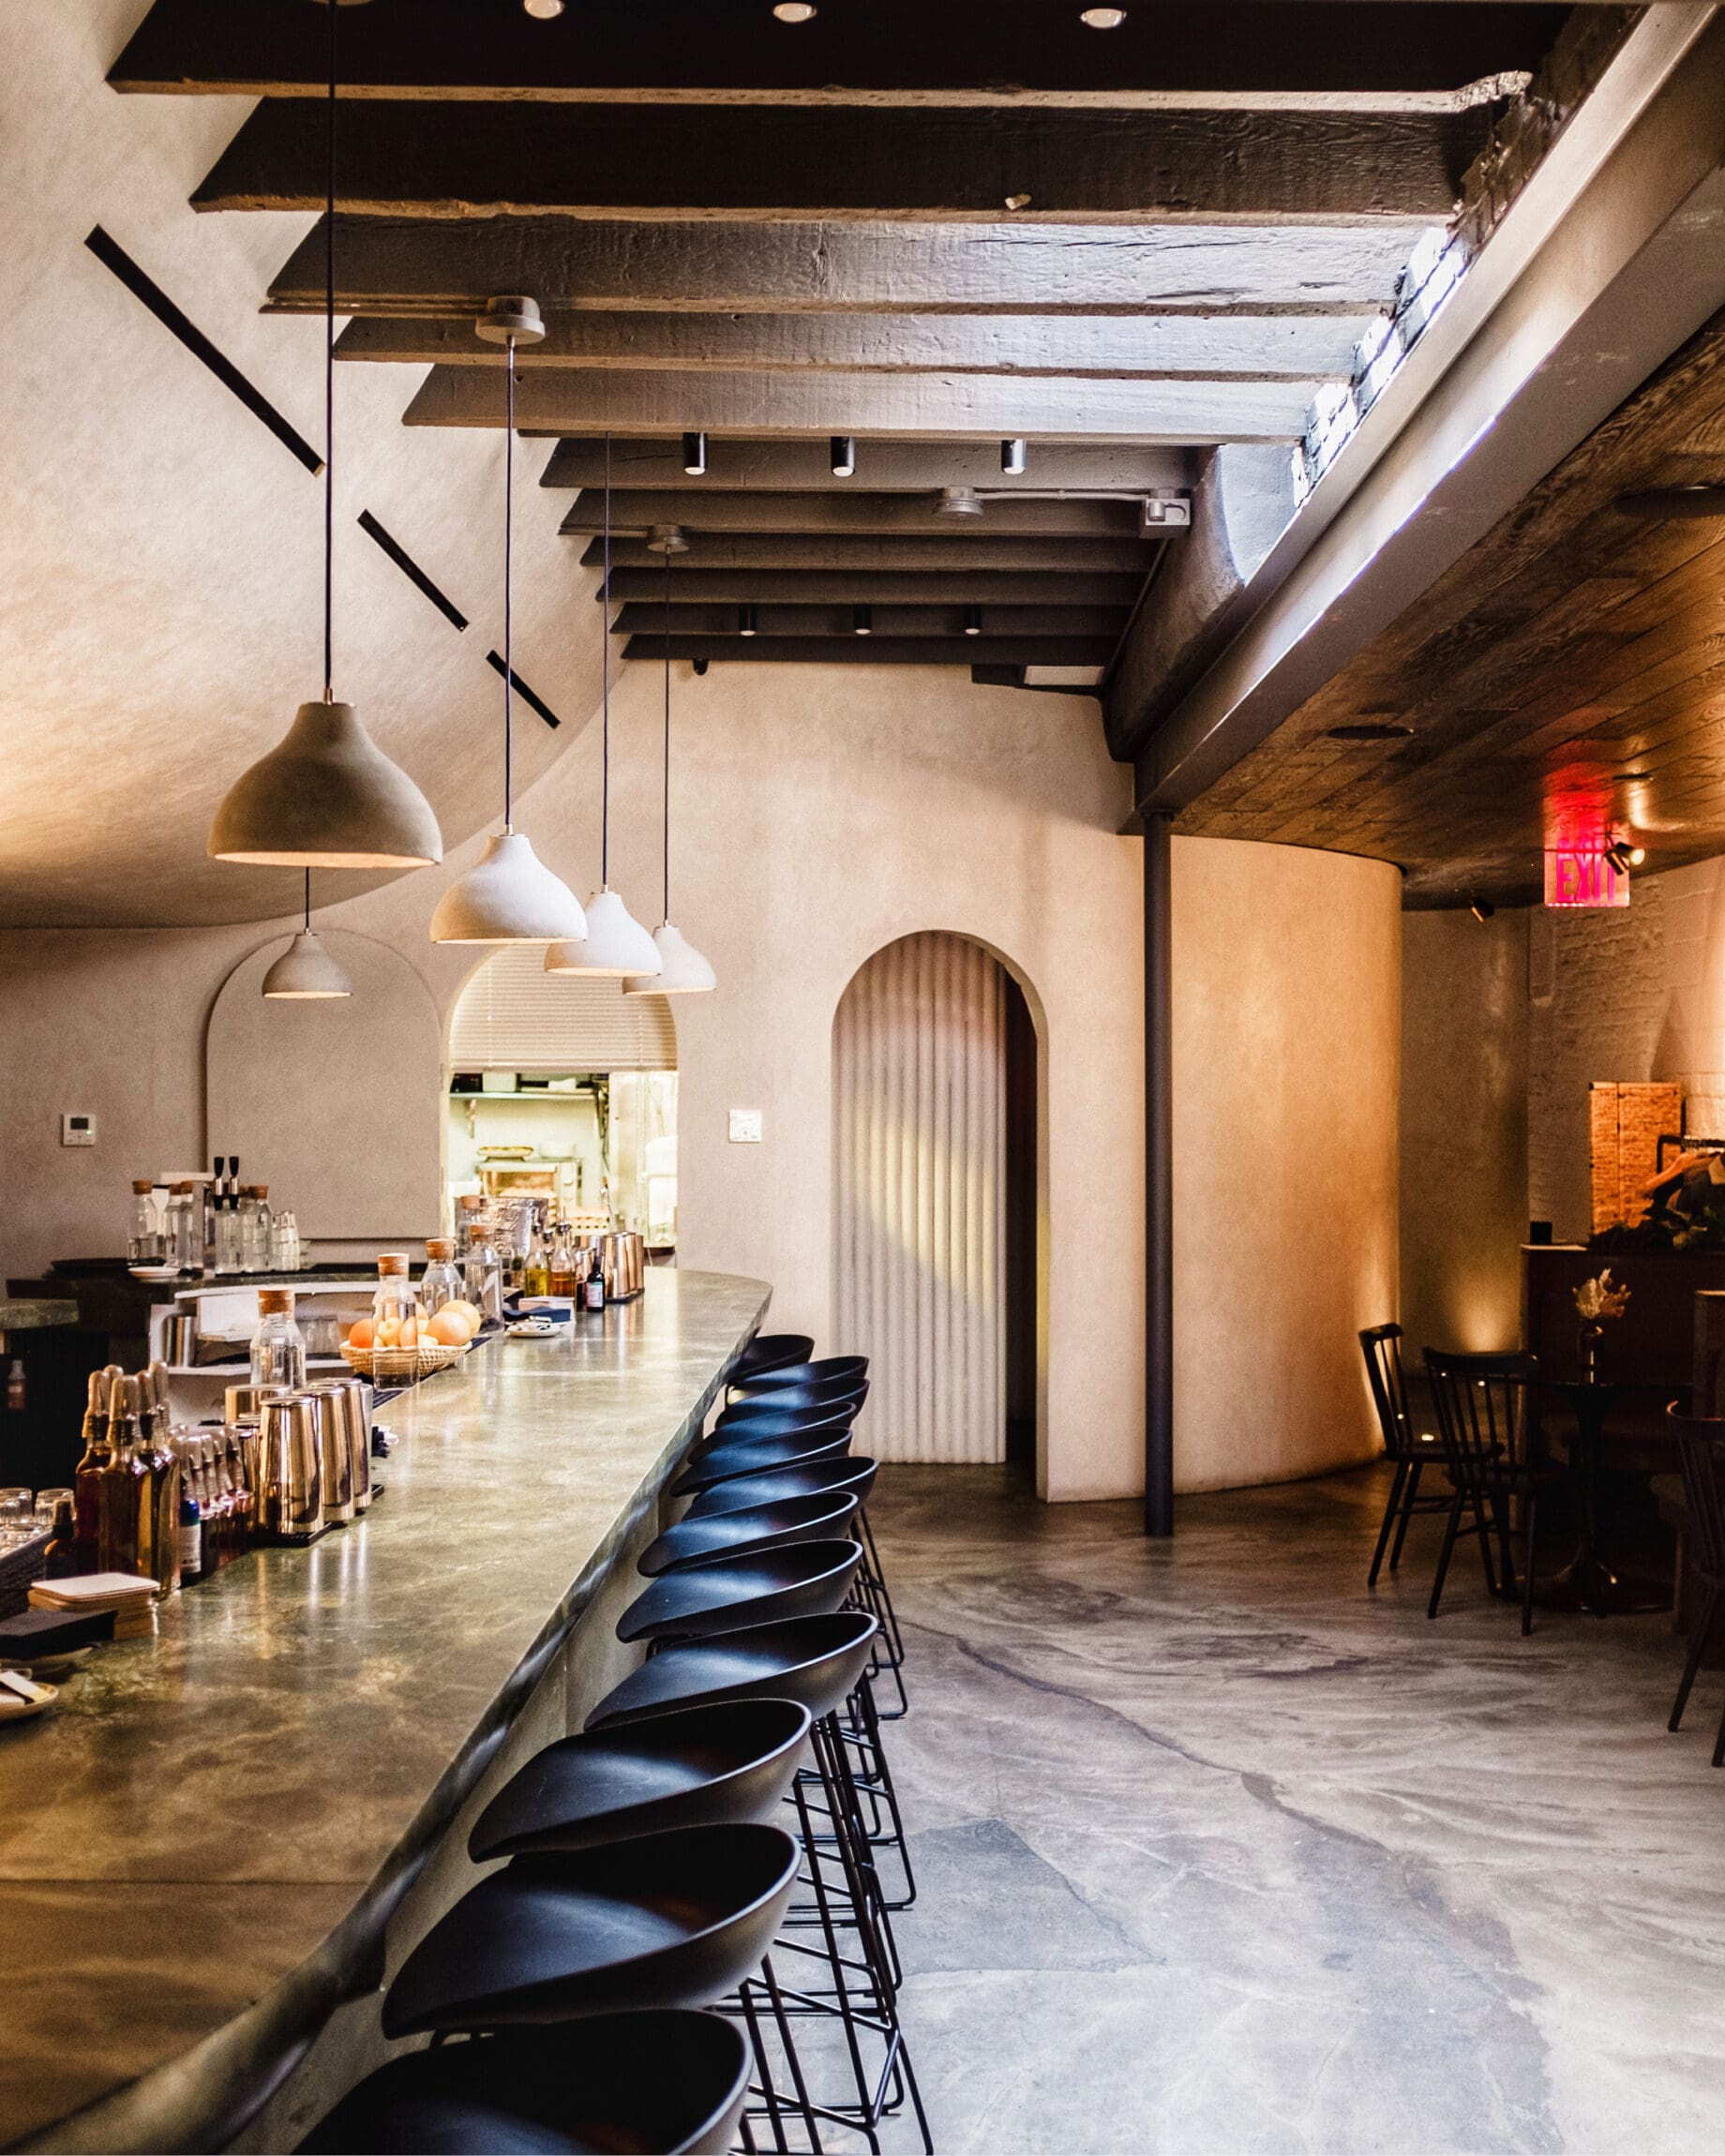 The best bars in Williamsburg, NY | Interiors at Bar Beau